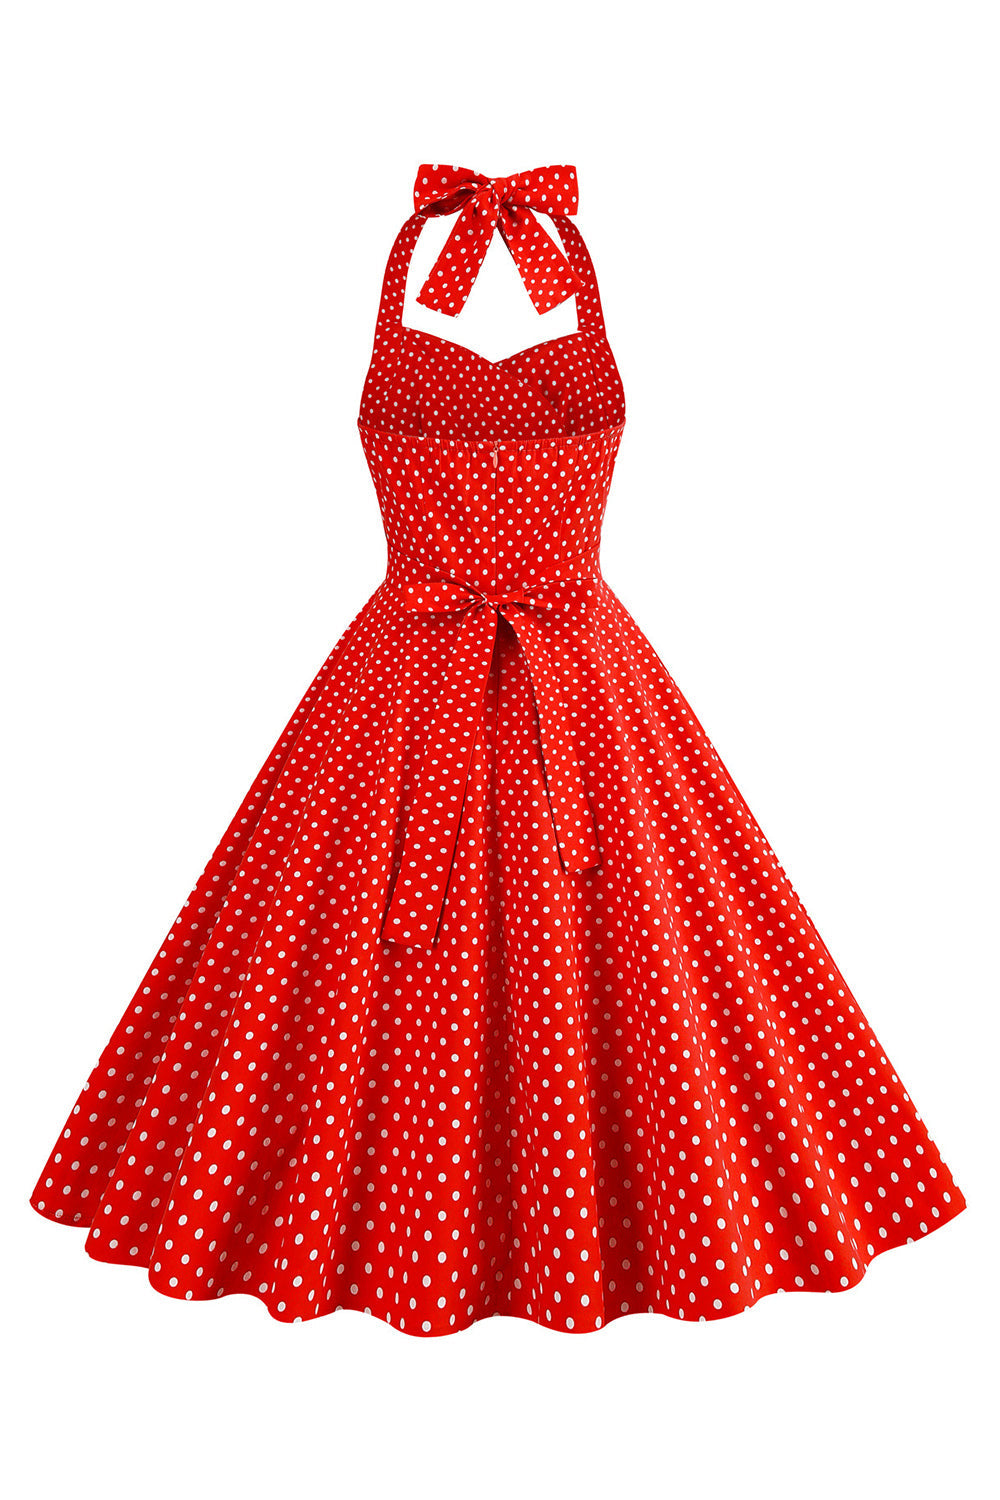 Halter Red Polka Dots 1950s Dress